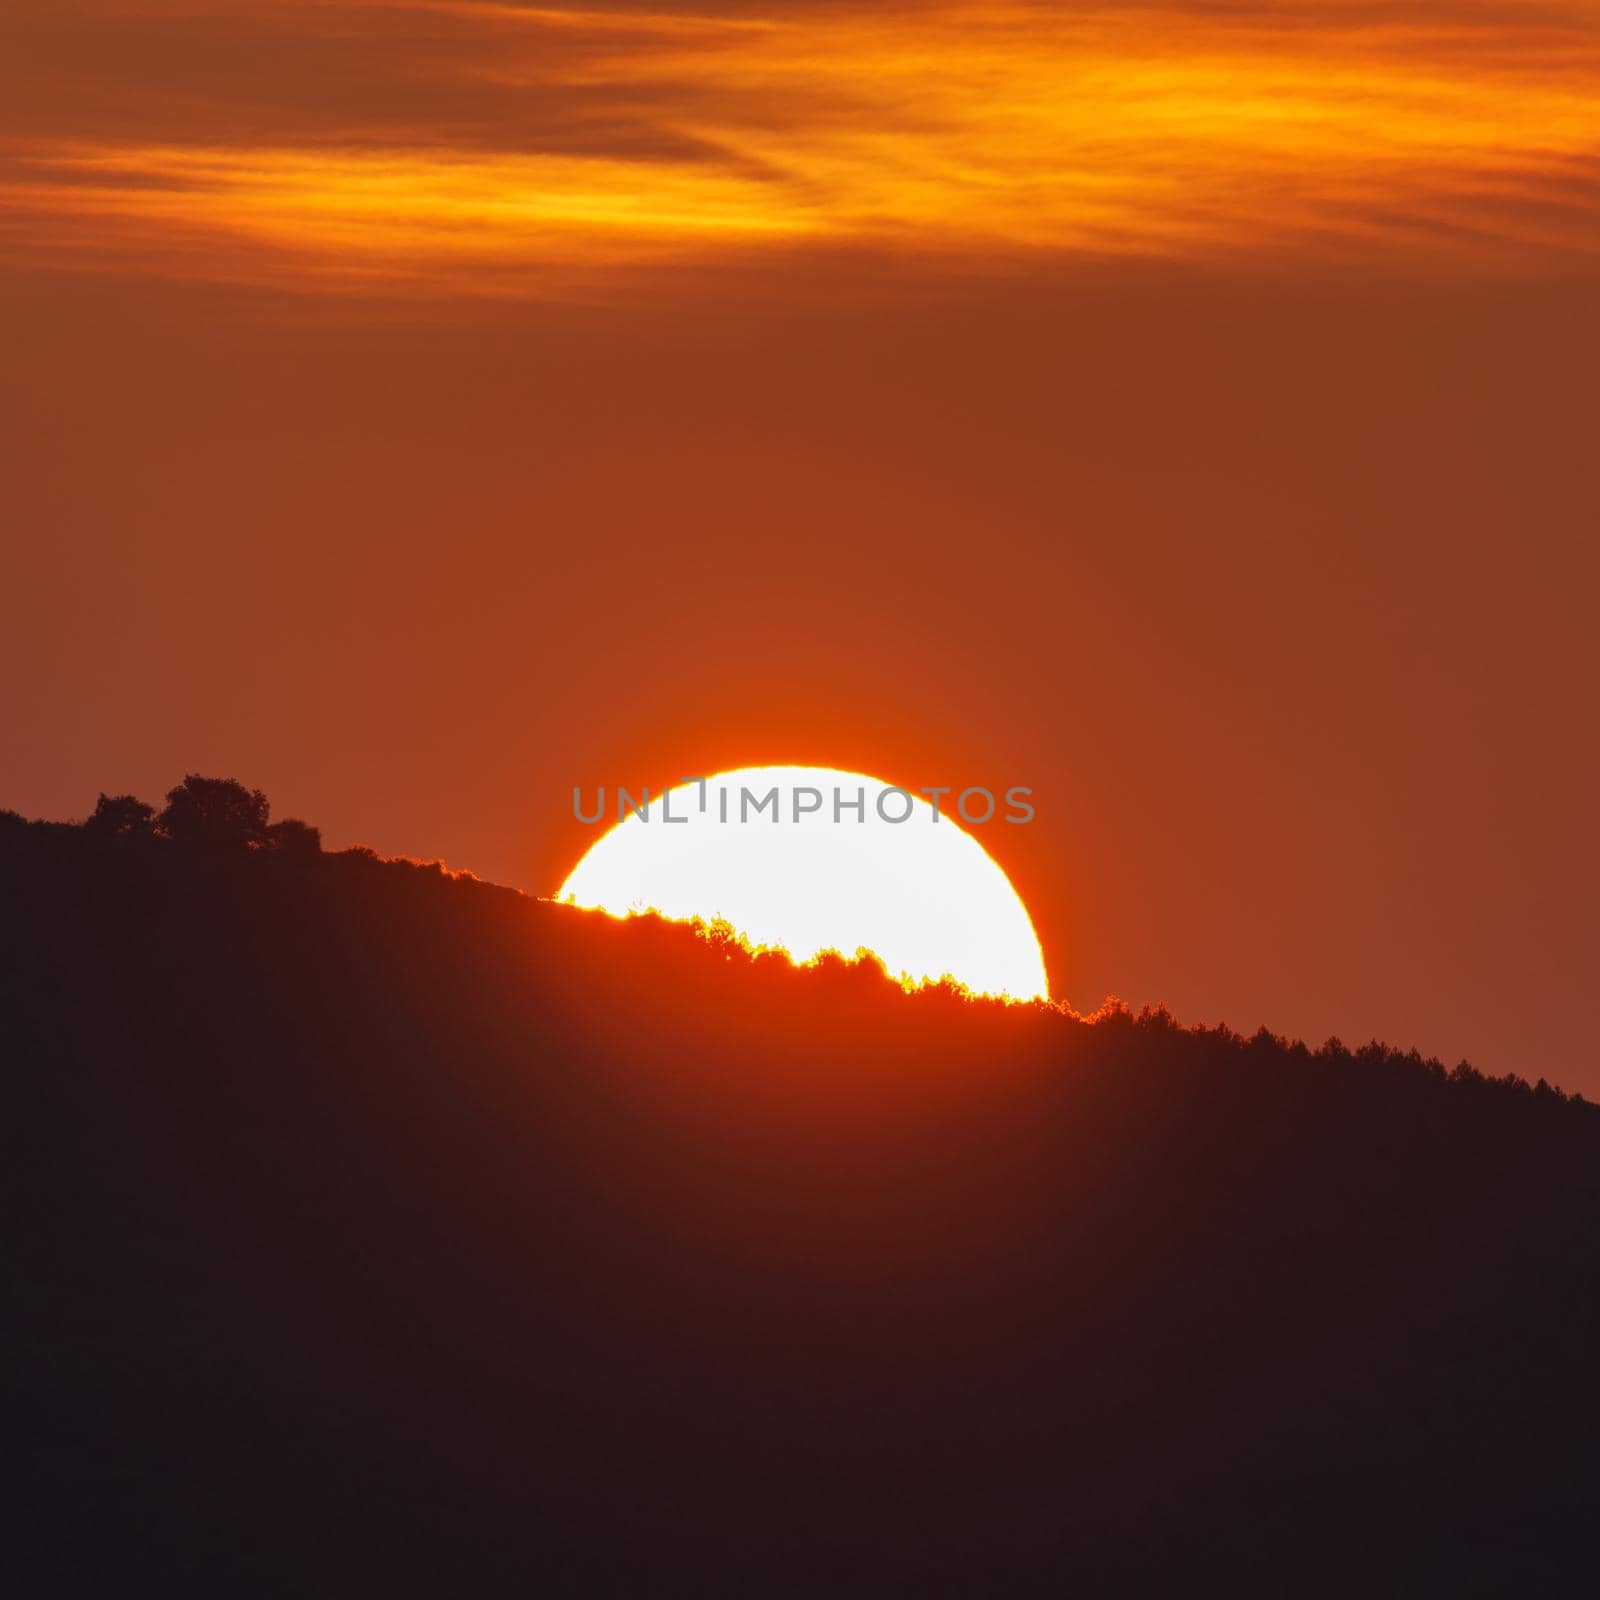 Sun behind mountain at sunrise, orange colors by FerradalFCG